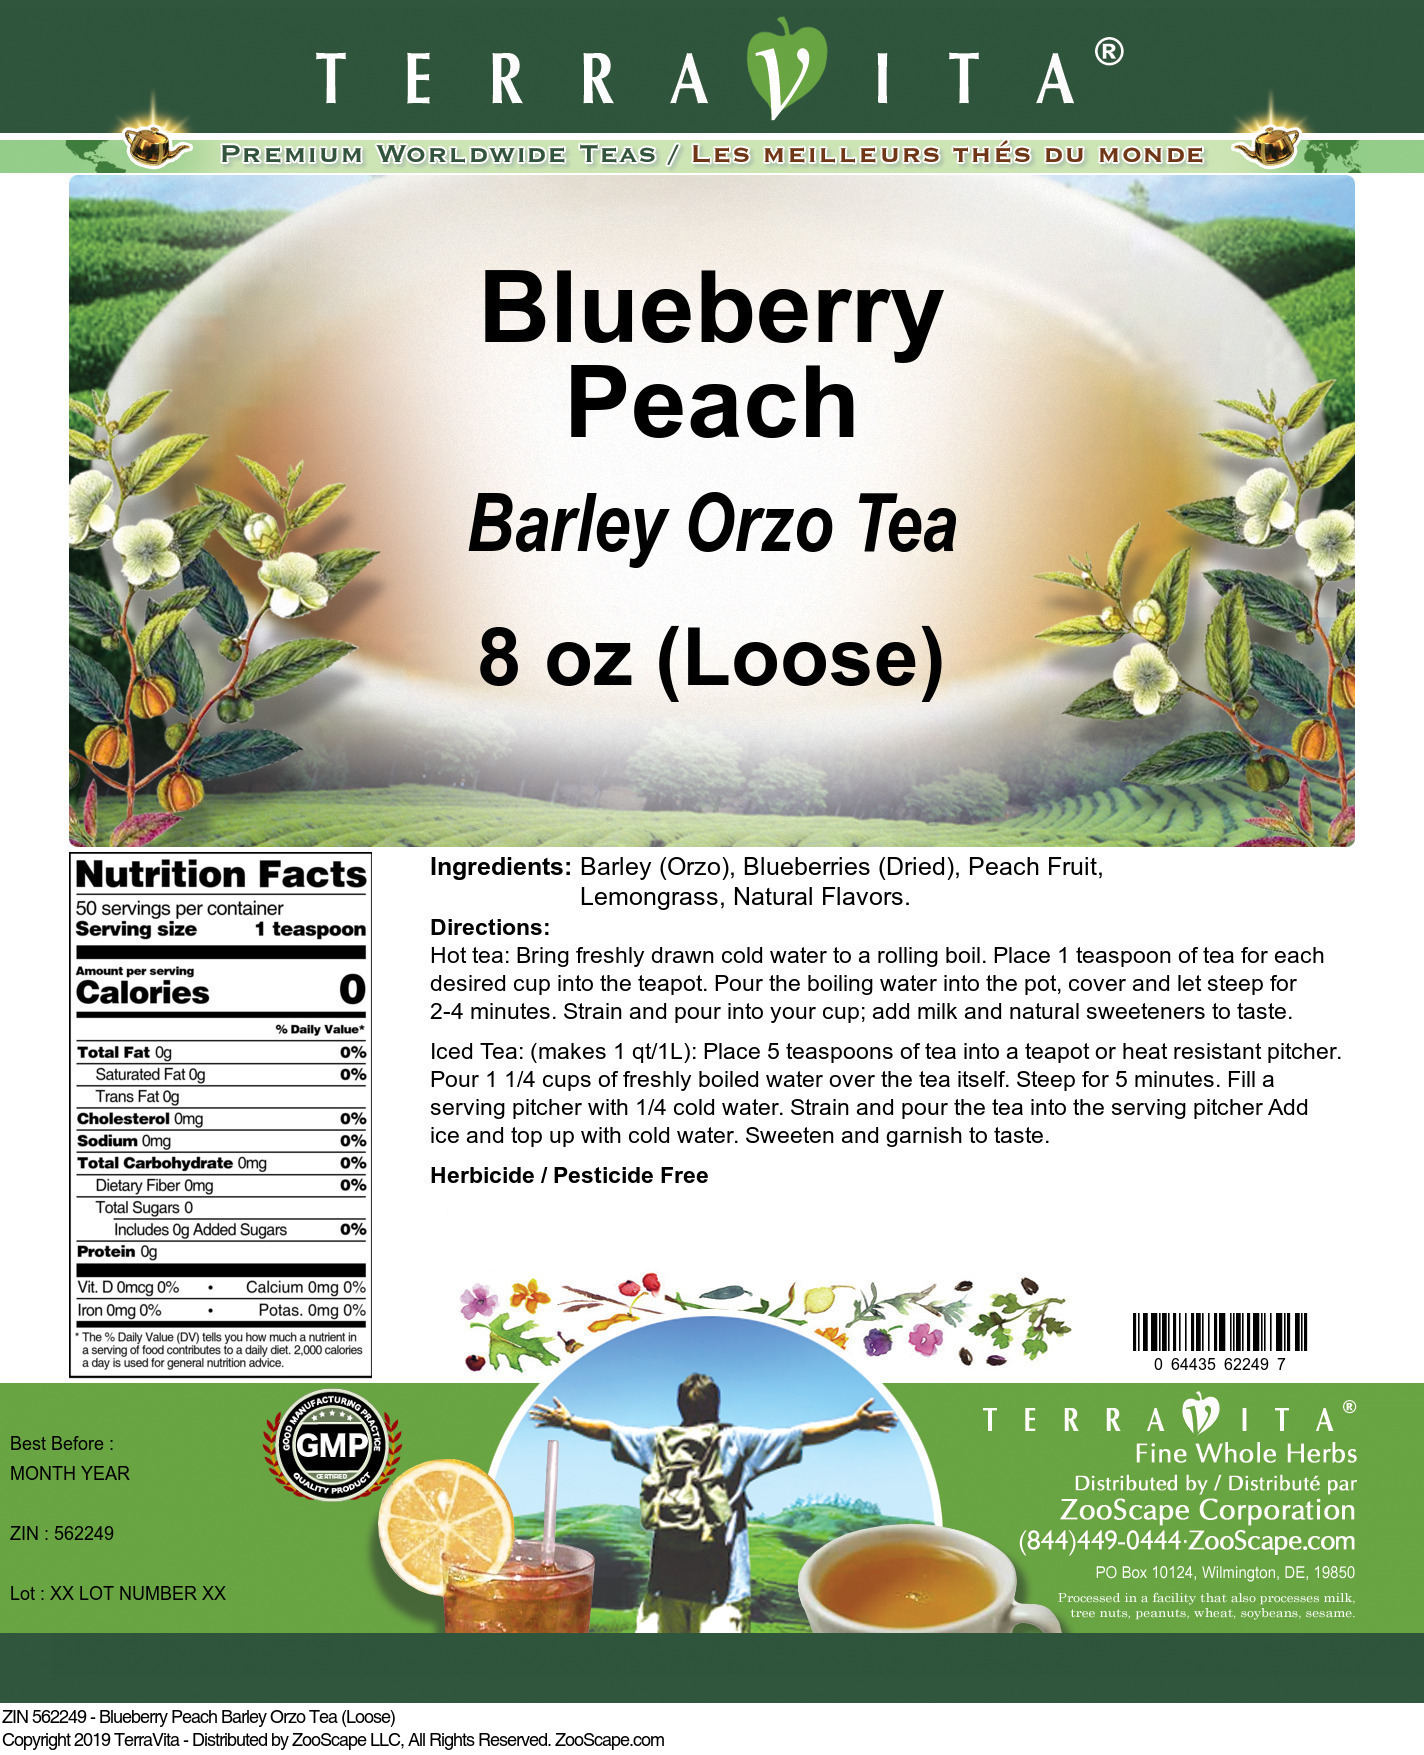 Blueberry Peach Barley Orzo Tea (Loose) - Label